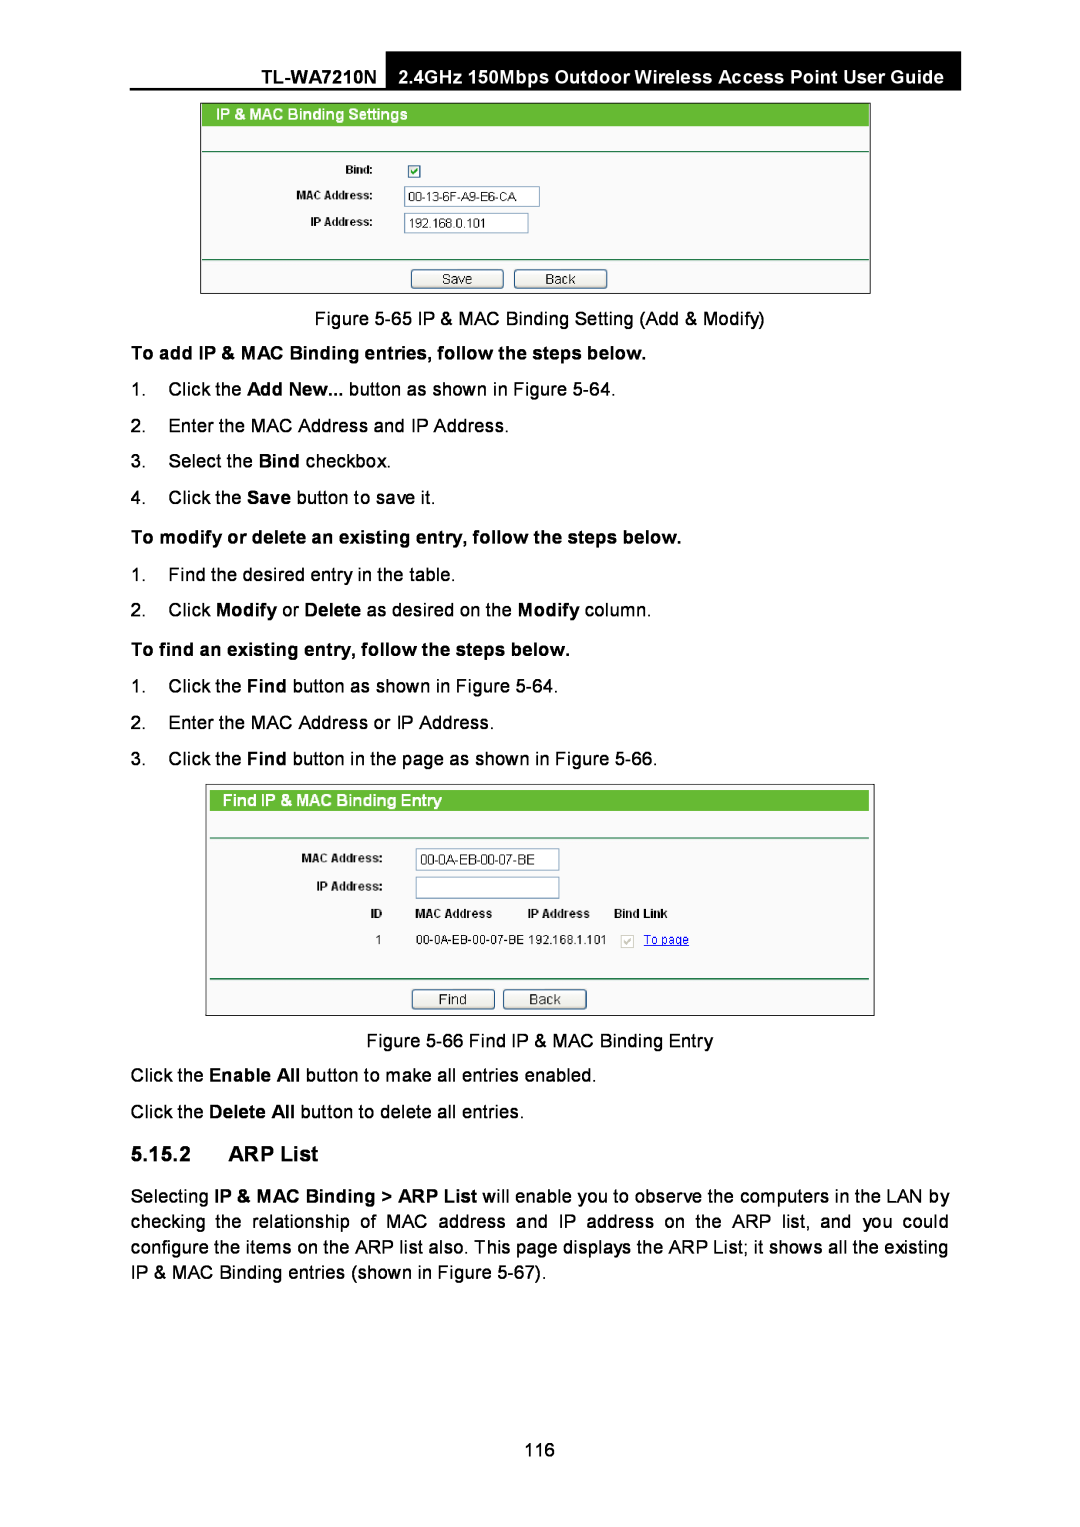 TP-Link TL-WA7210N manual ARP List, To add IP & MAC Binding entries, follow the steps below 